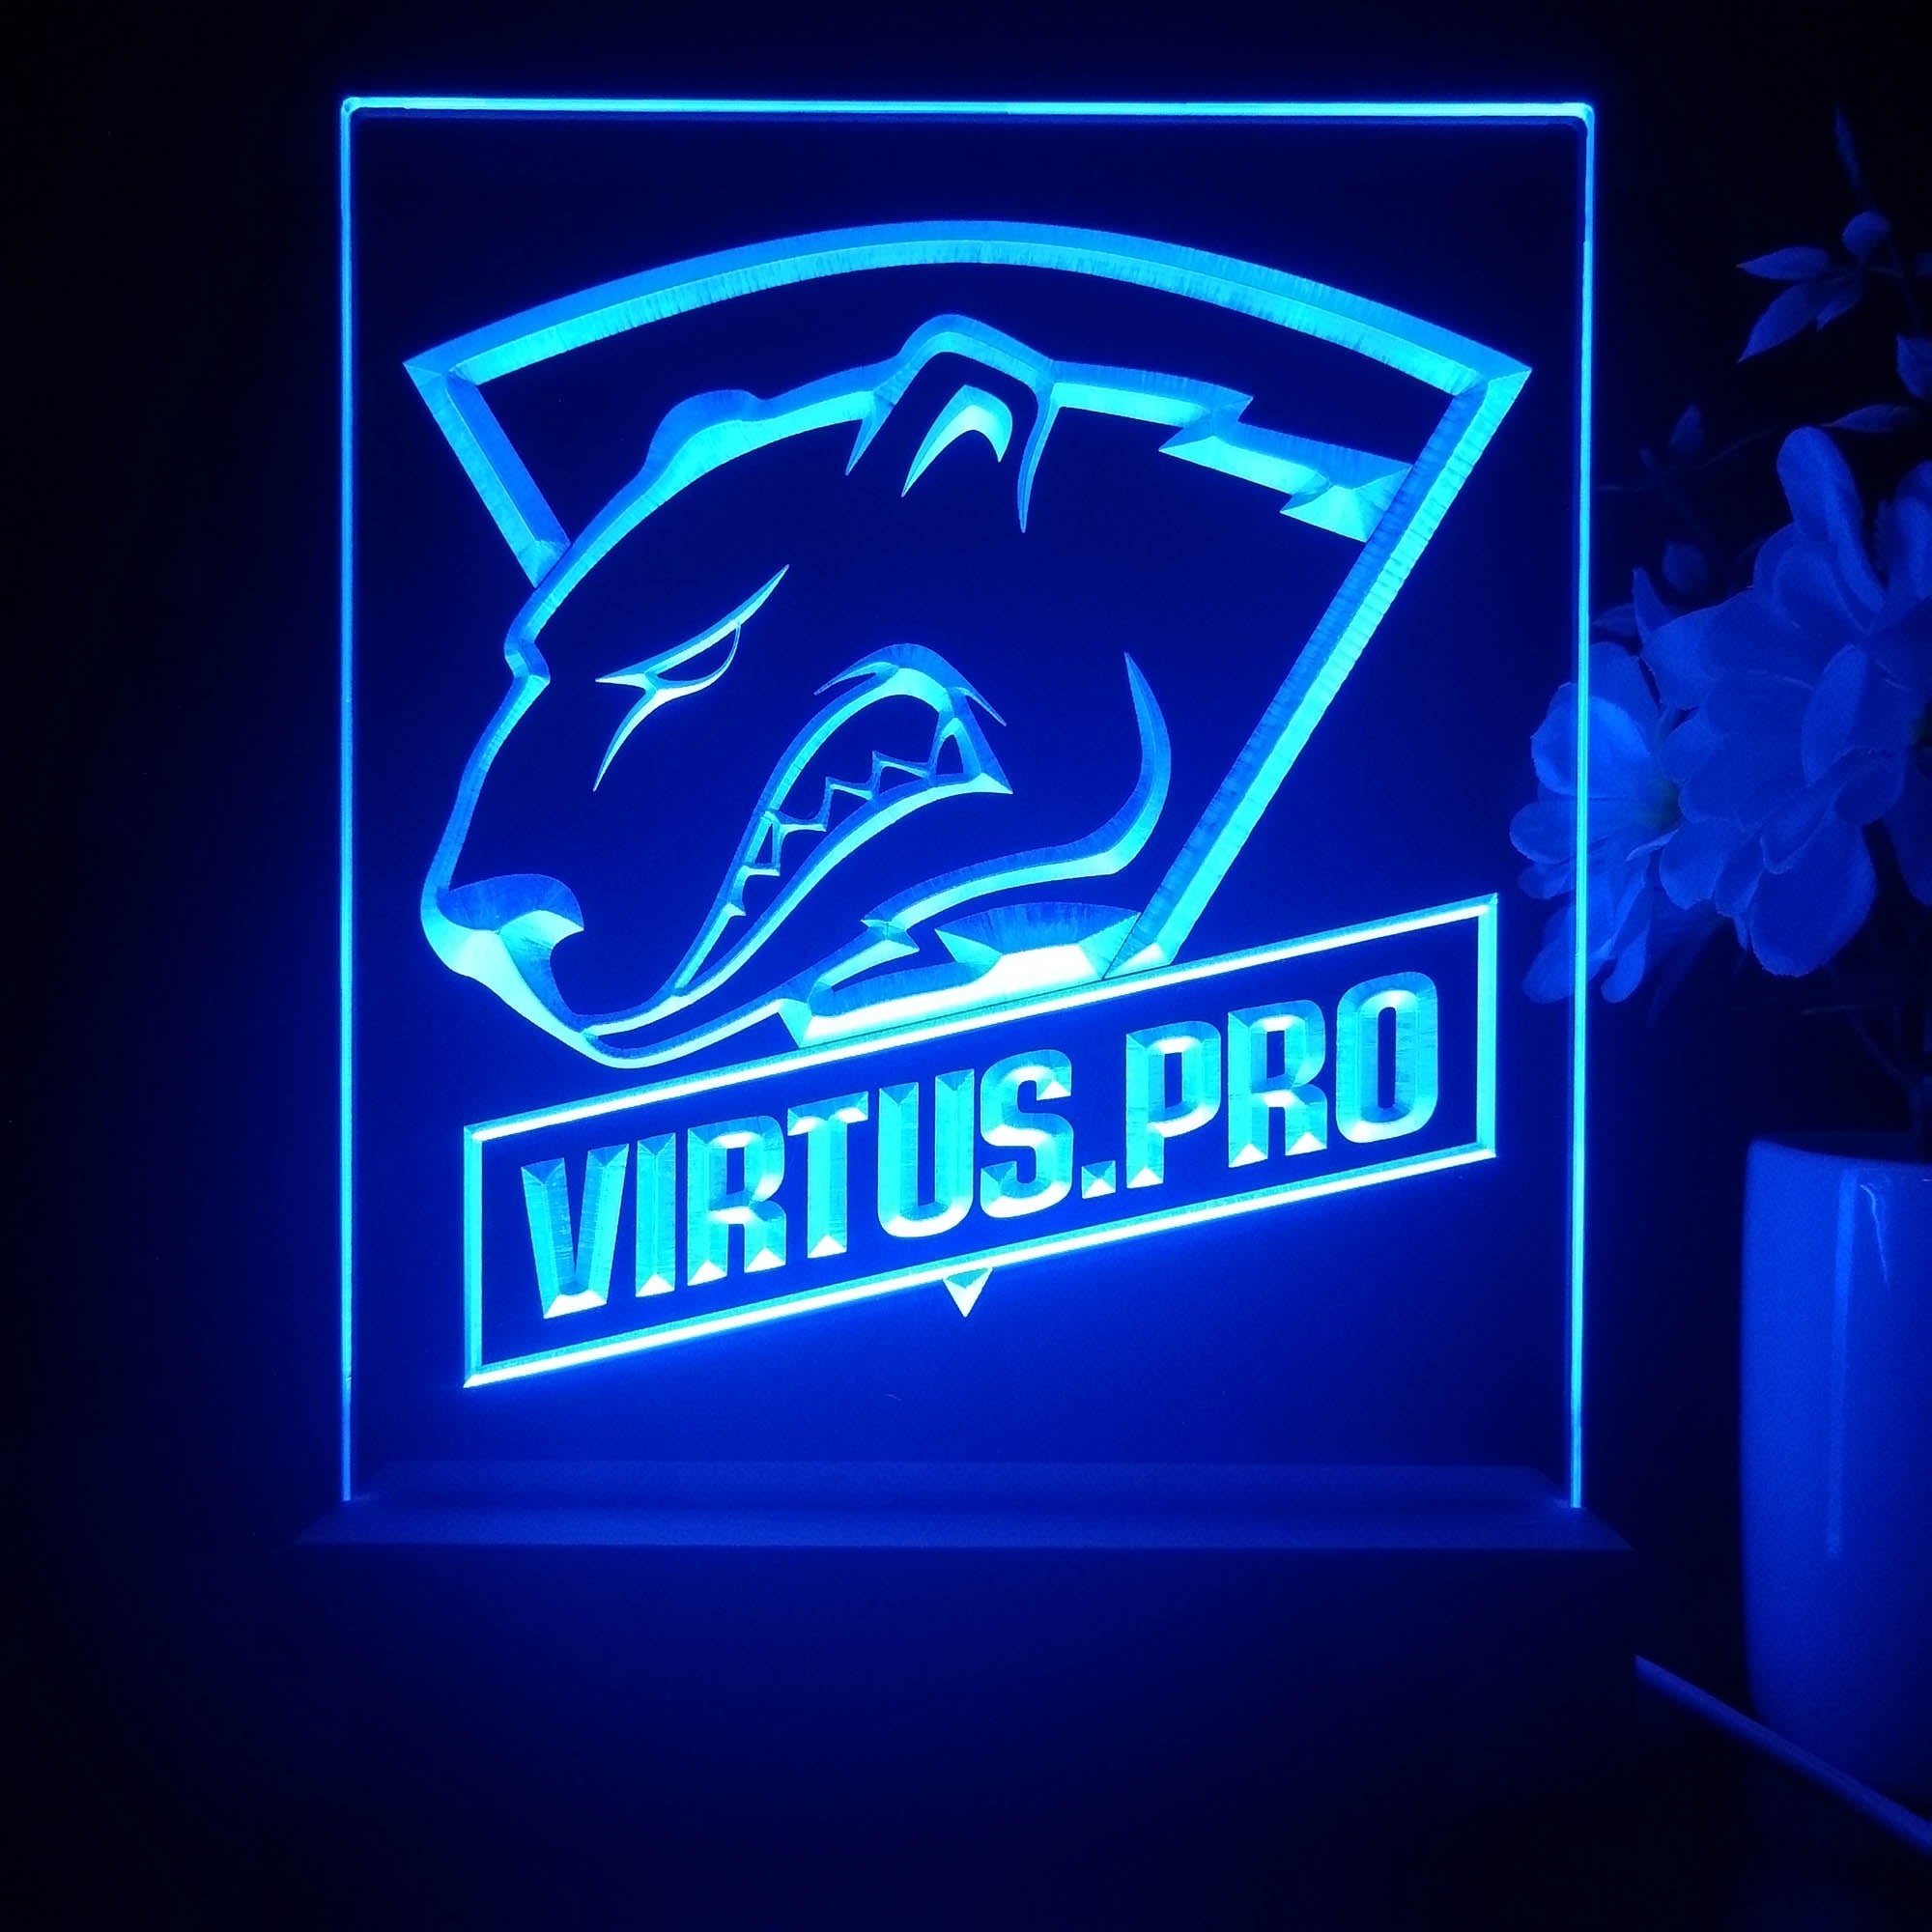 Virtus Pro 3D Illusion Night Light Desk Lamp